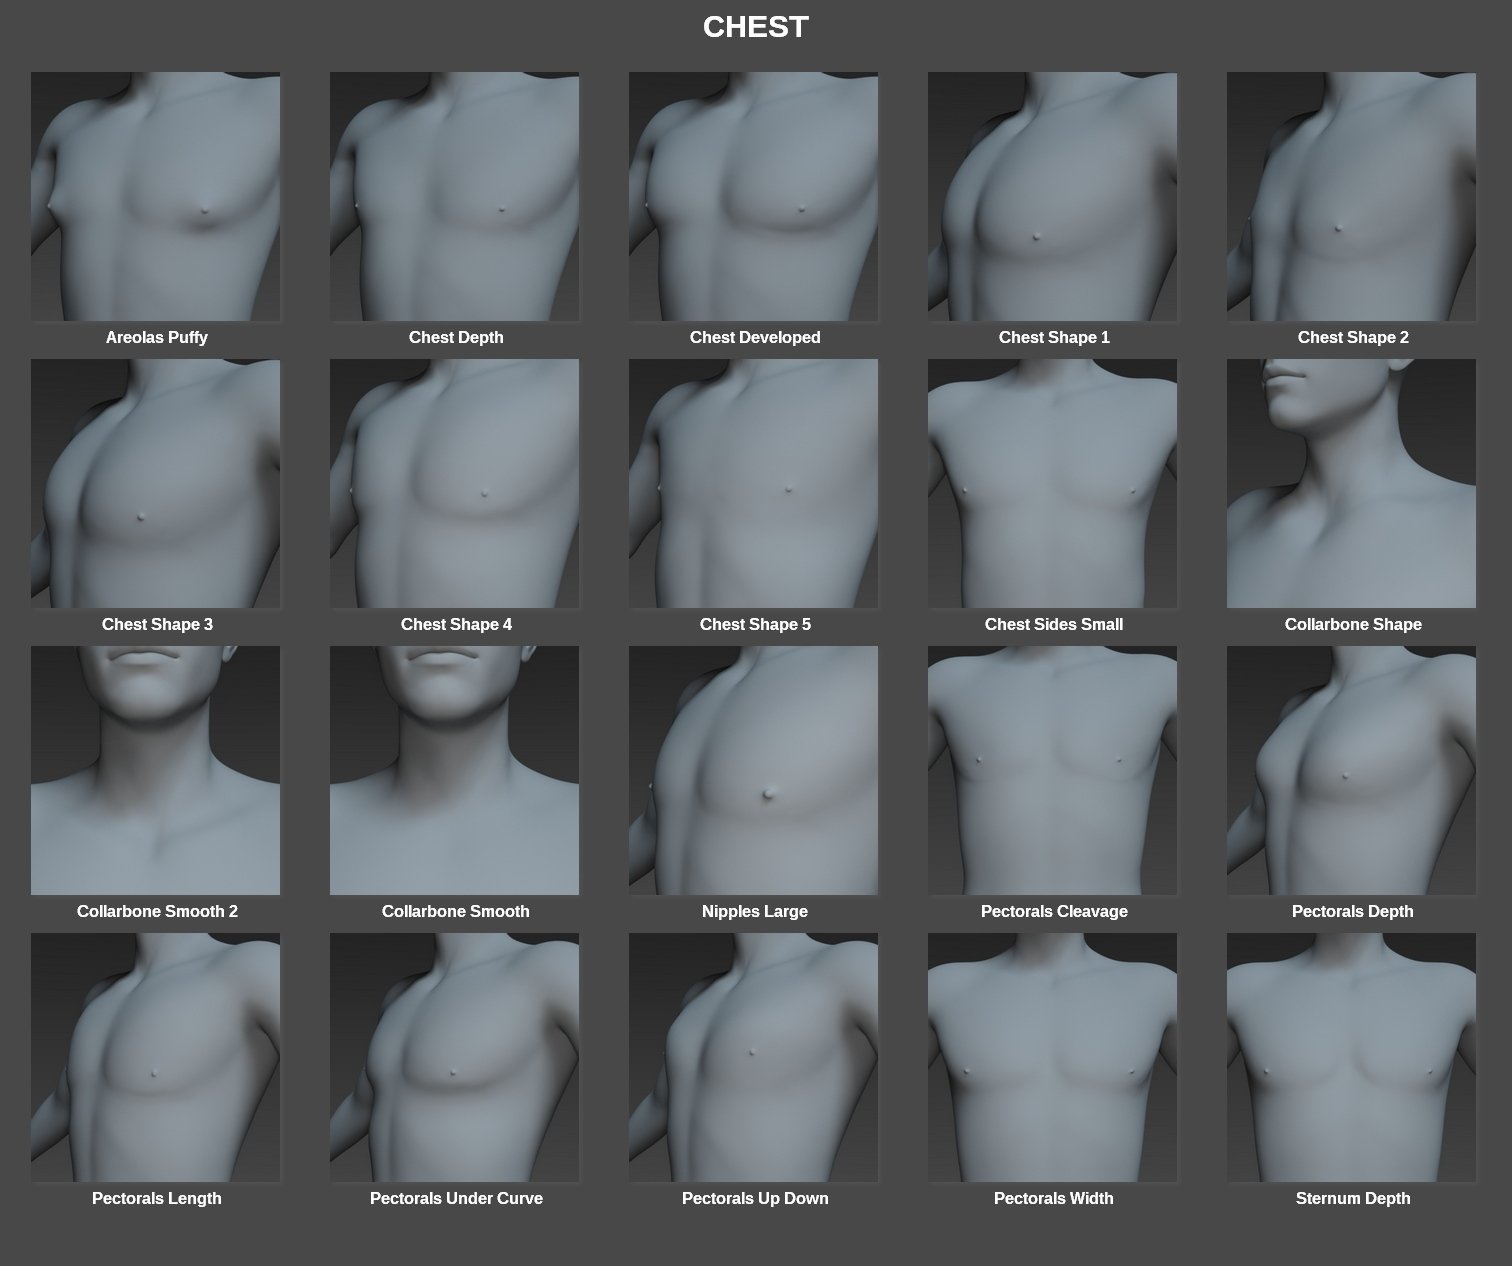 Body Morph Kit for Genesis 8 Male by: SF-Design, 3D Models by Daz 3D